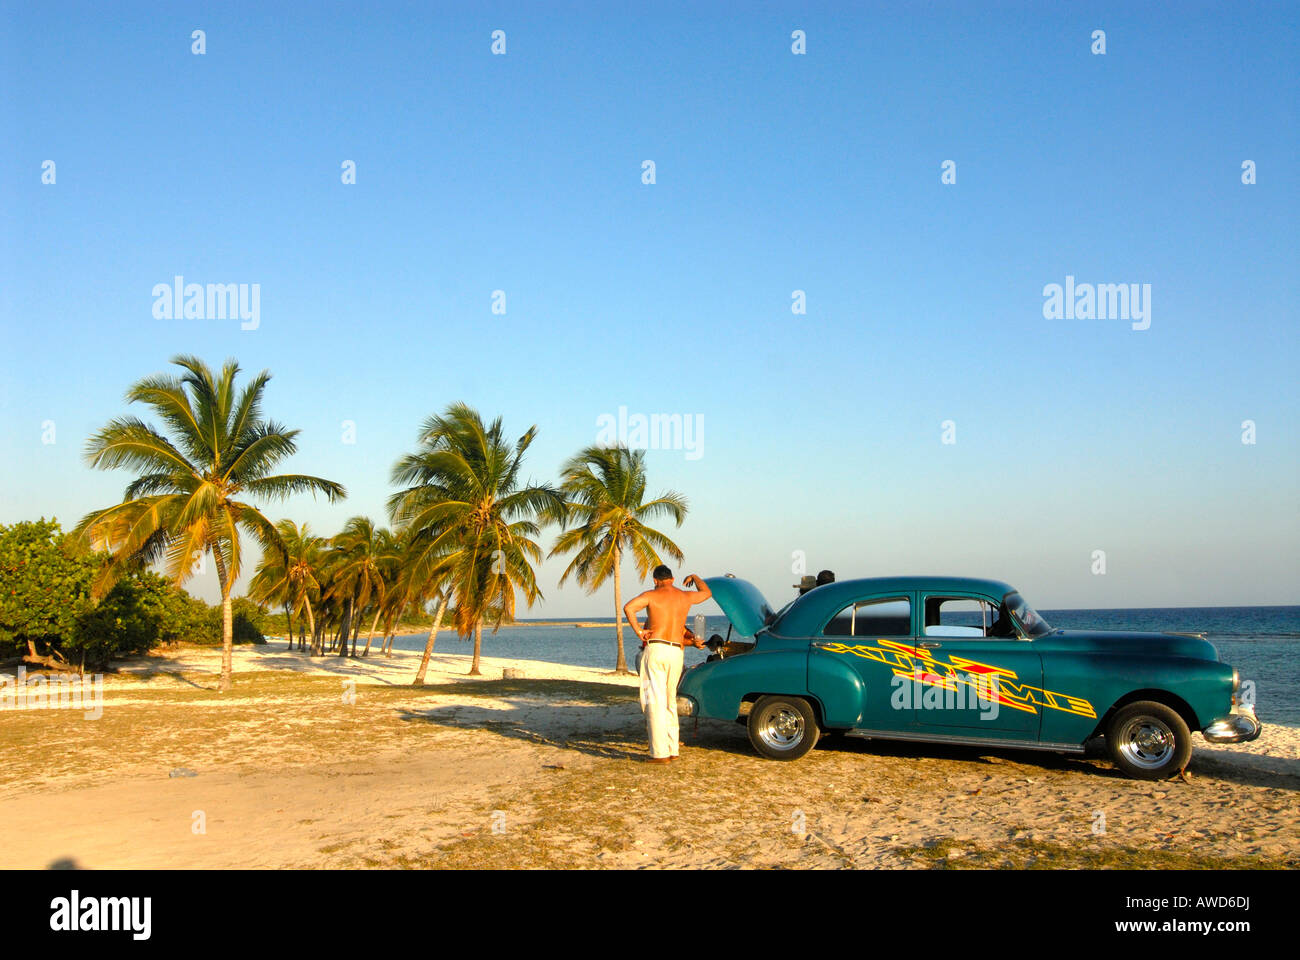 Vintage car parked a palm-lined beach, Playa Giron, Cuba, Caribbean, Americas Stock Photo